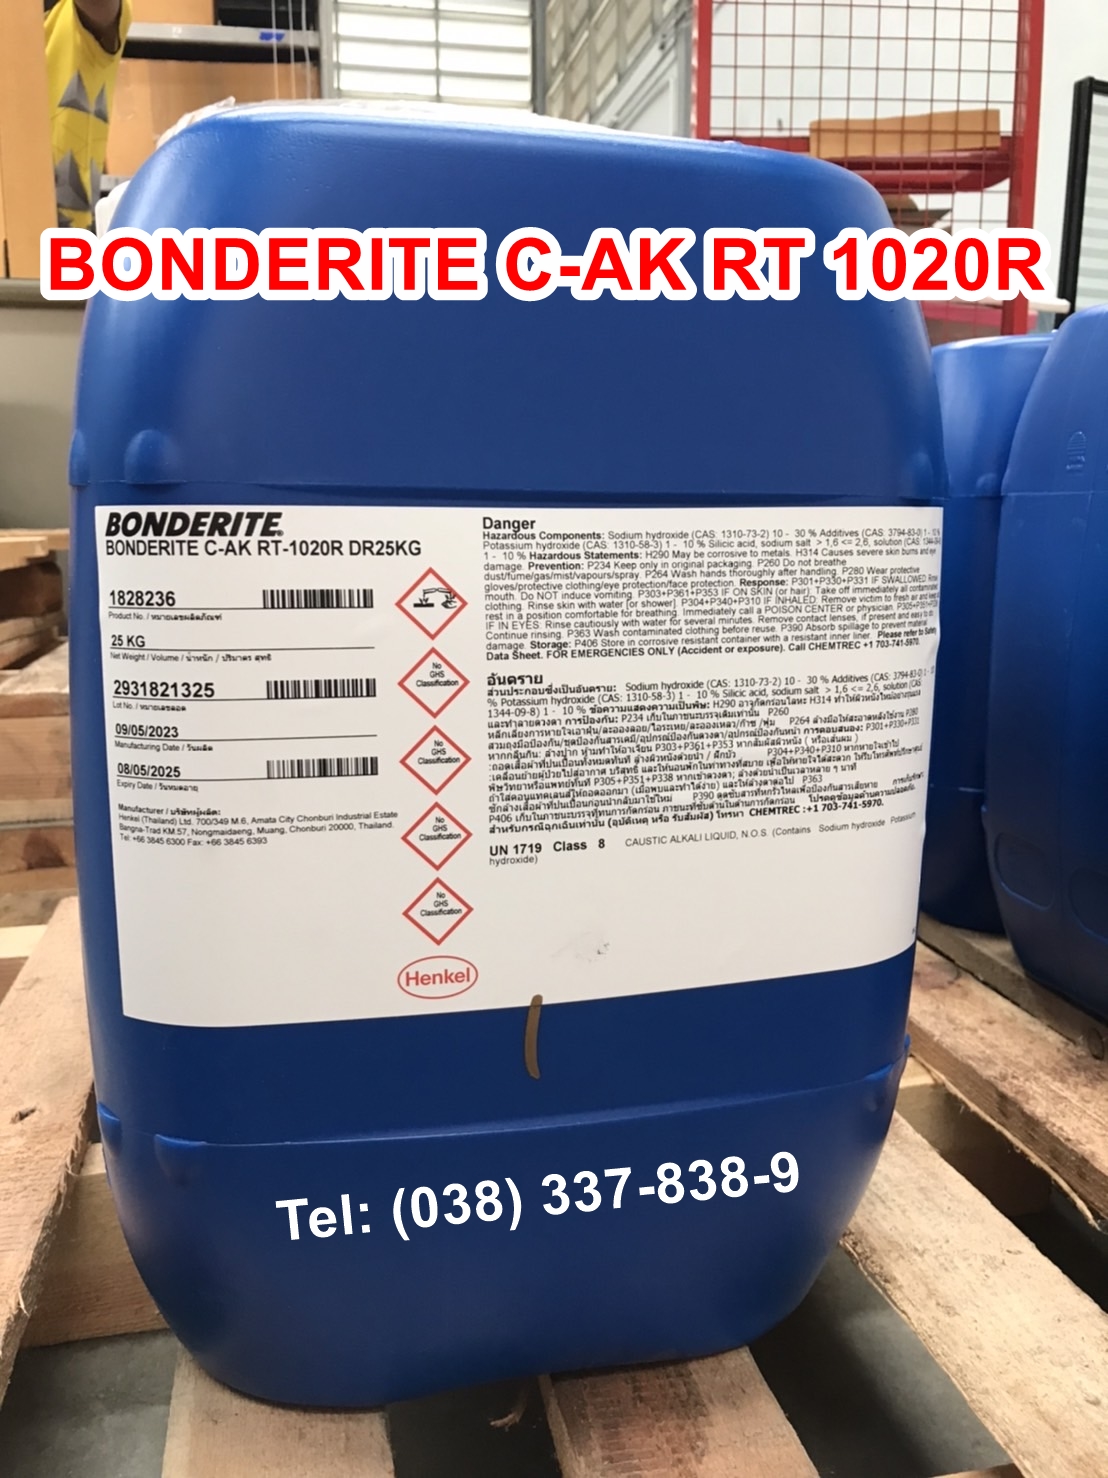 BONDERITE C-AK RT 1020R